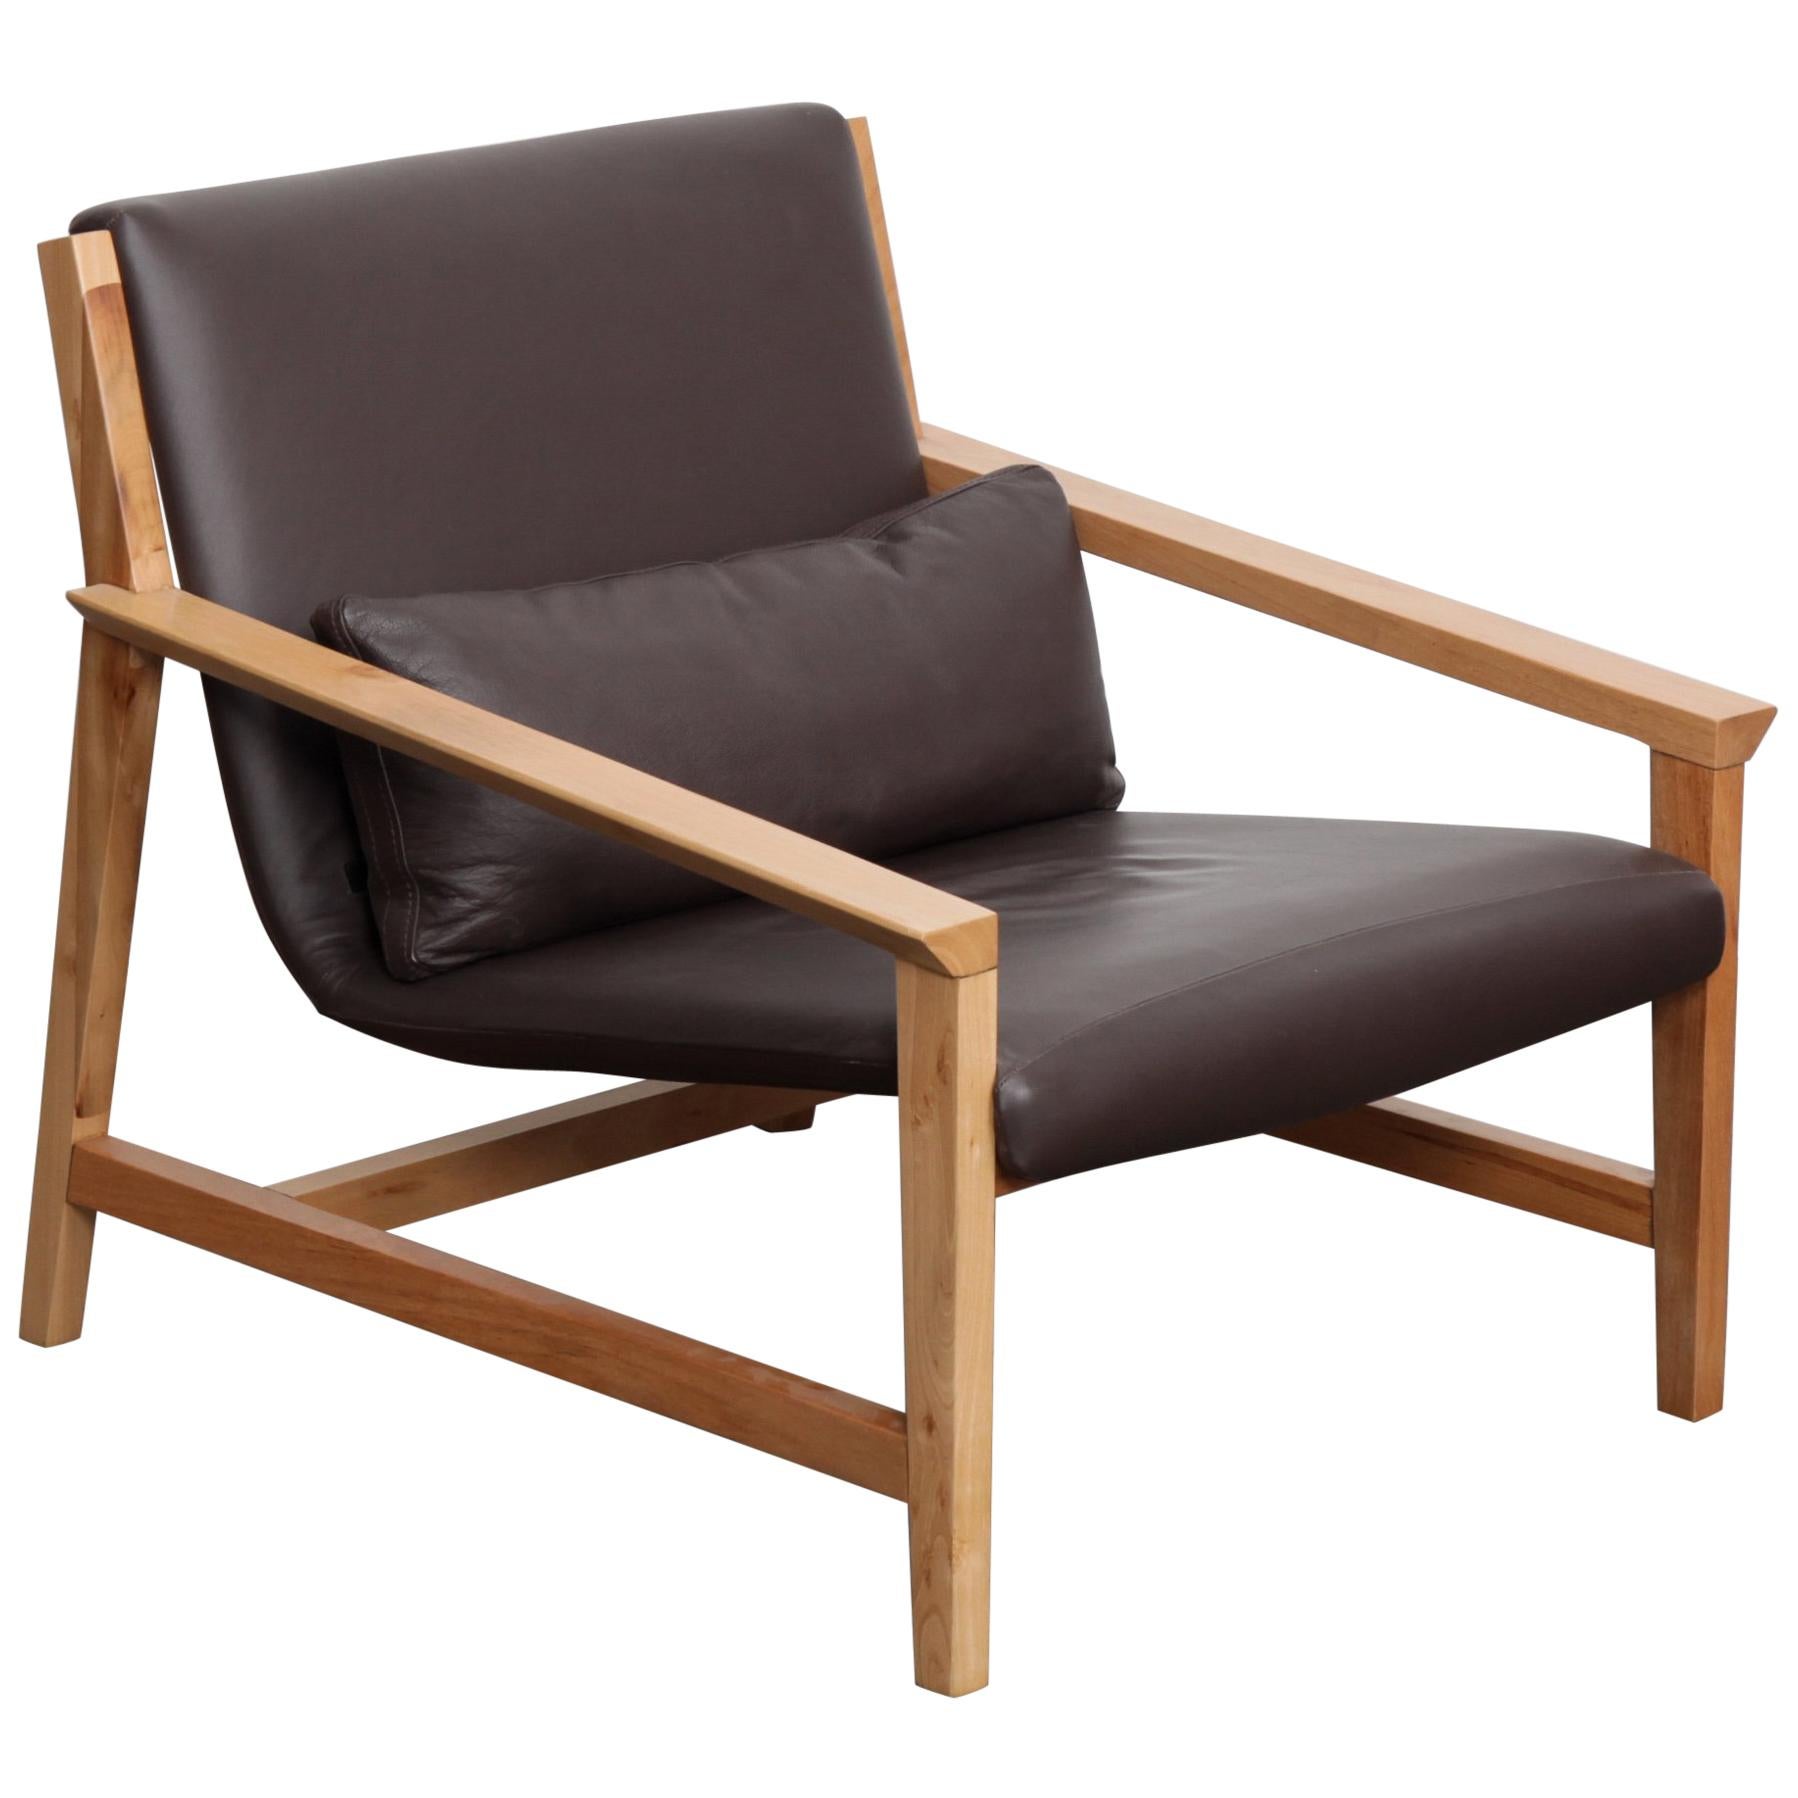 Winkelförmiger Lounge-Sessel mit massivem Ahorngestell und schokoladenbraunem Lederbezug im Angebot